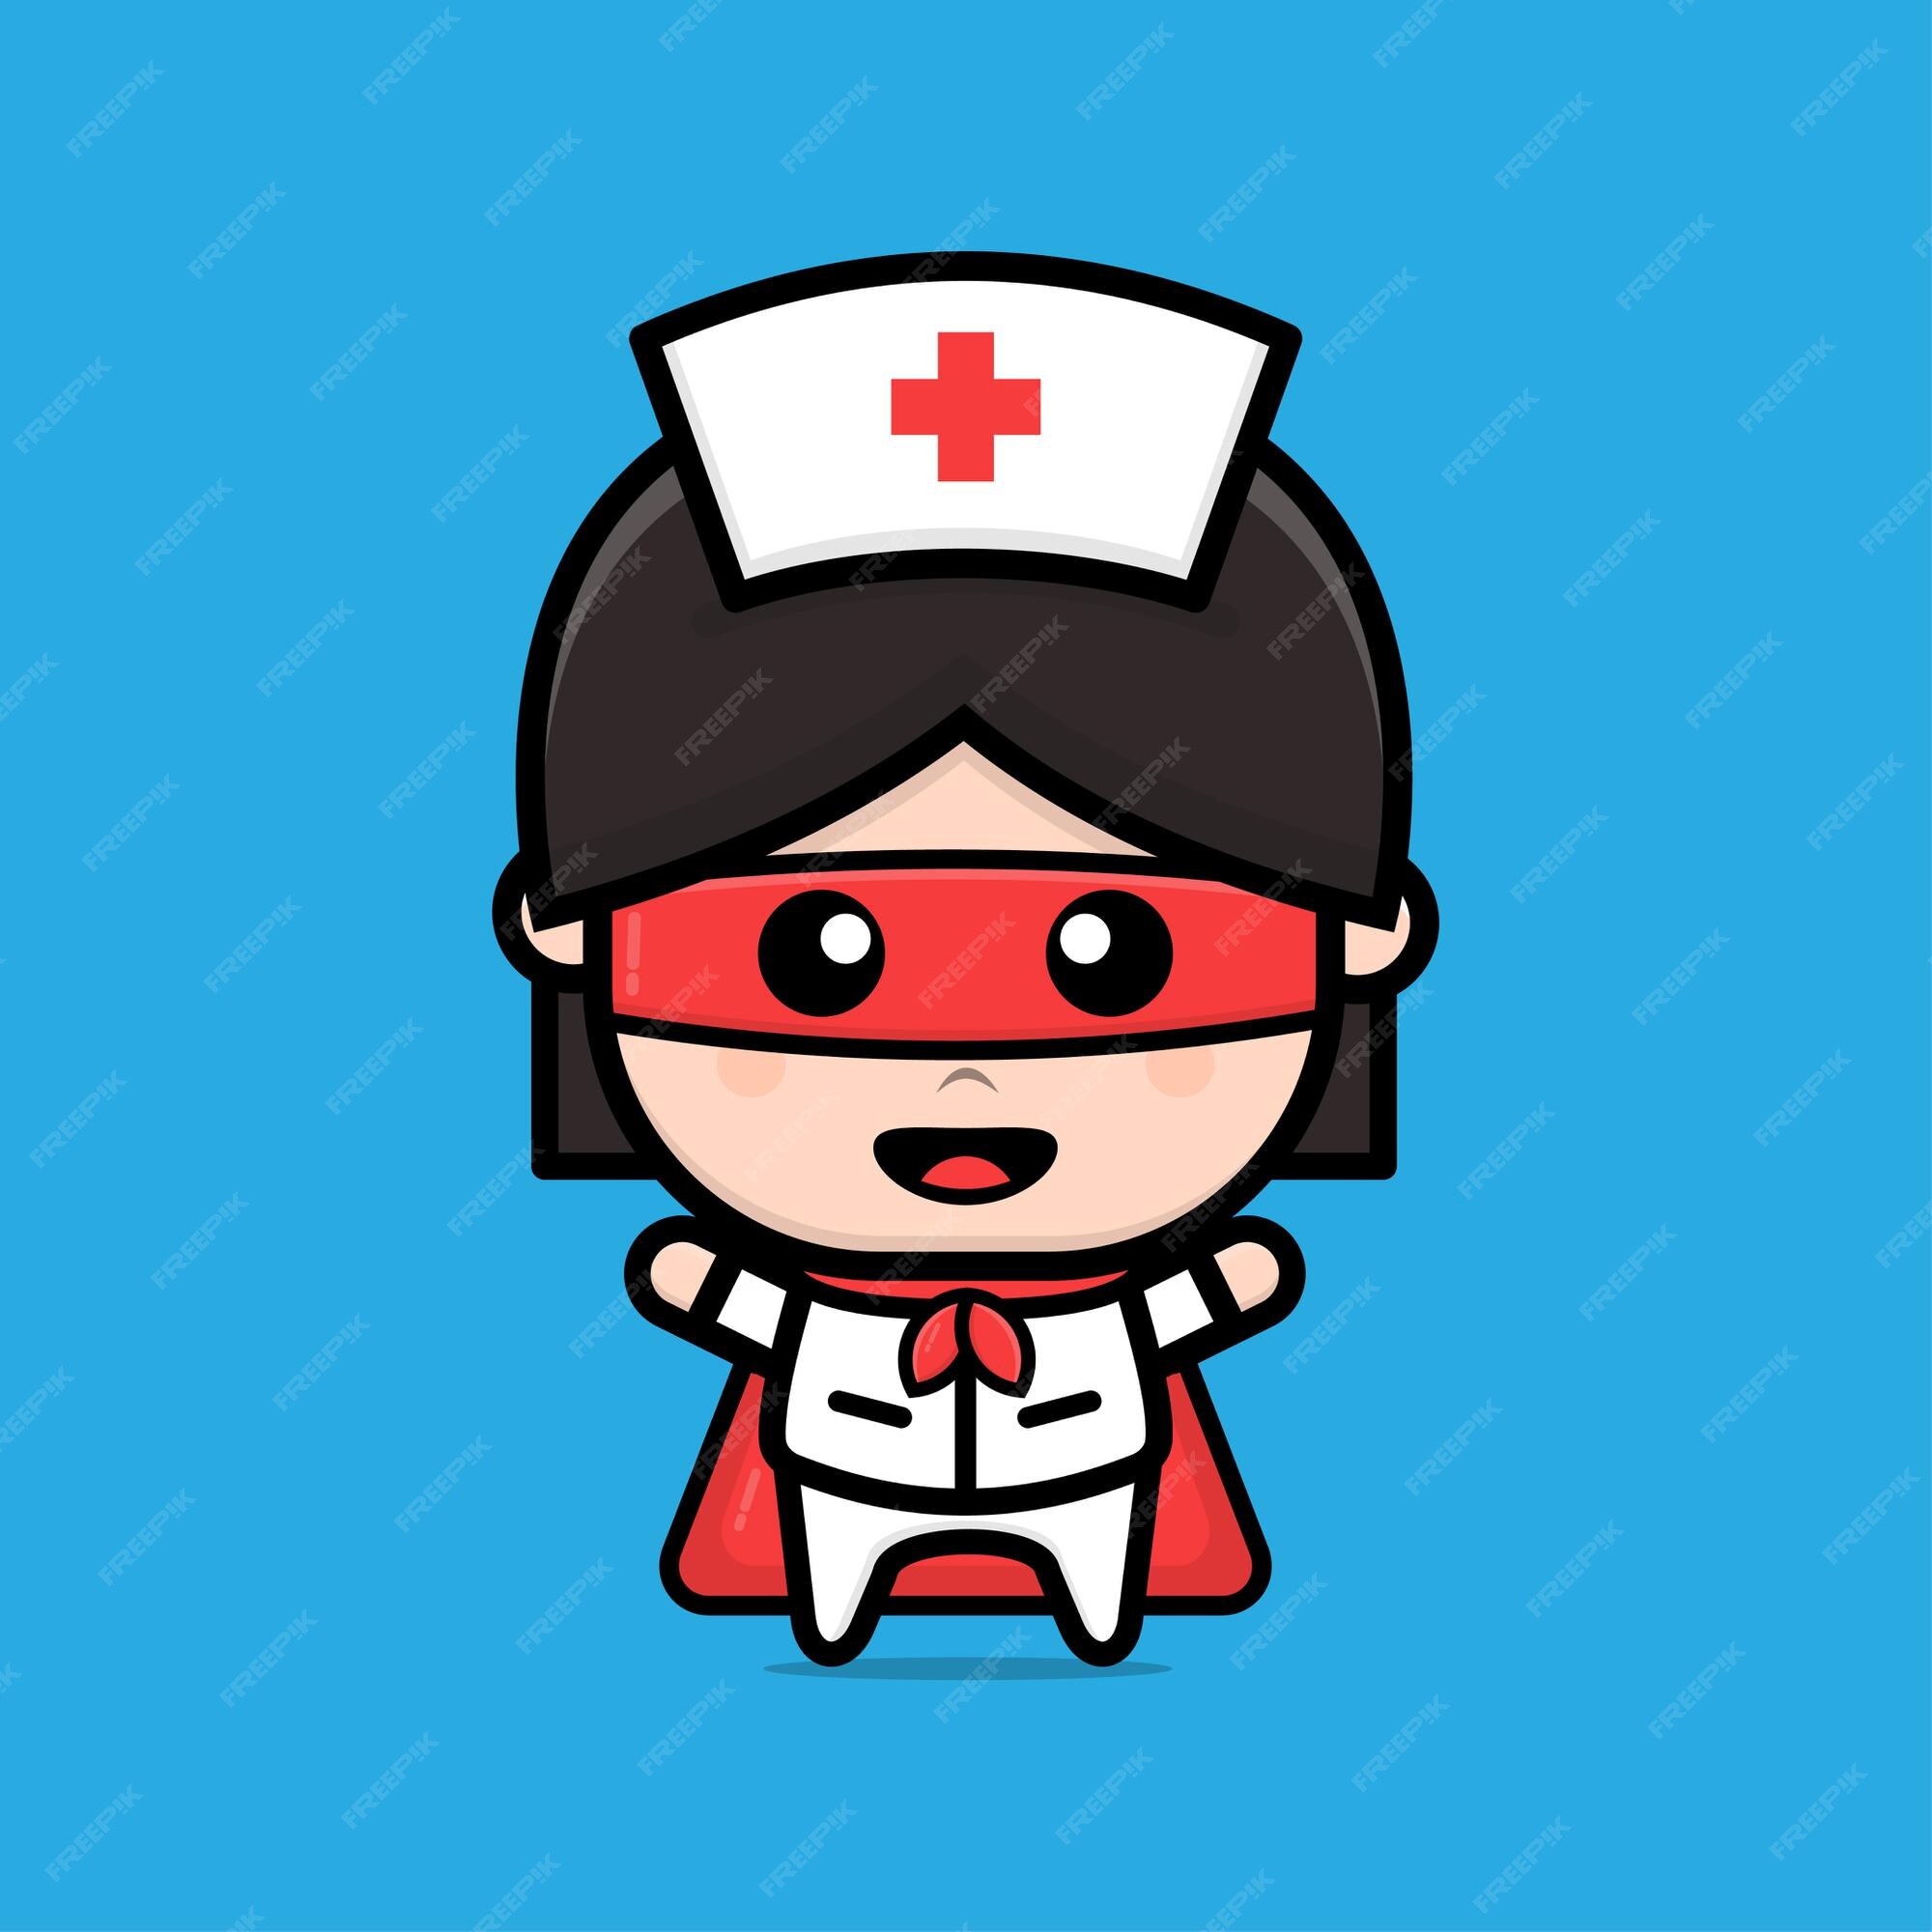 Premium Vector | The nurses design is a hero illustration